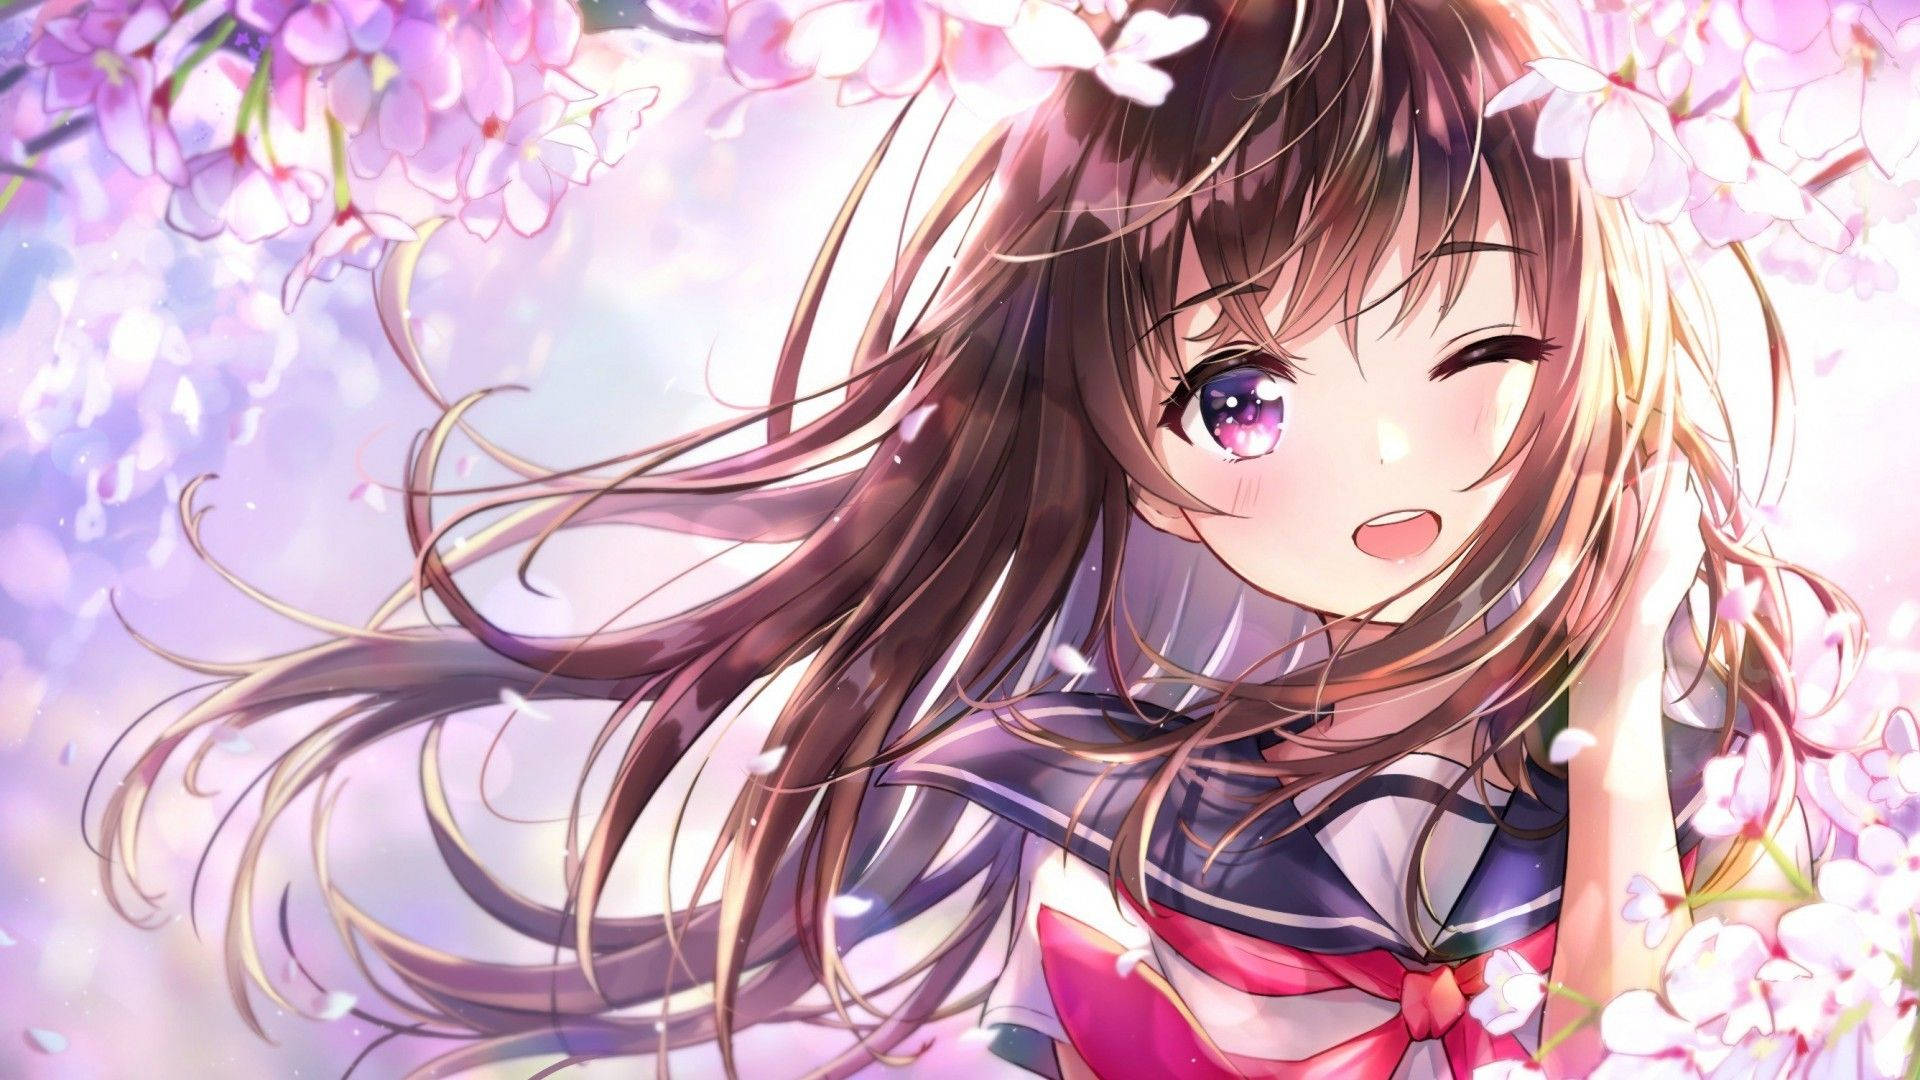 Cute Anime Girl Winking Background